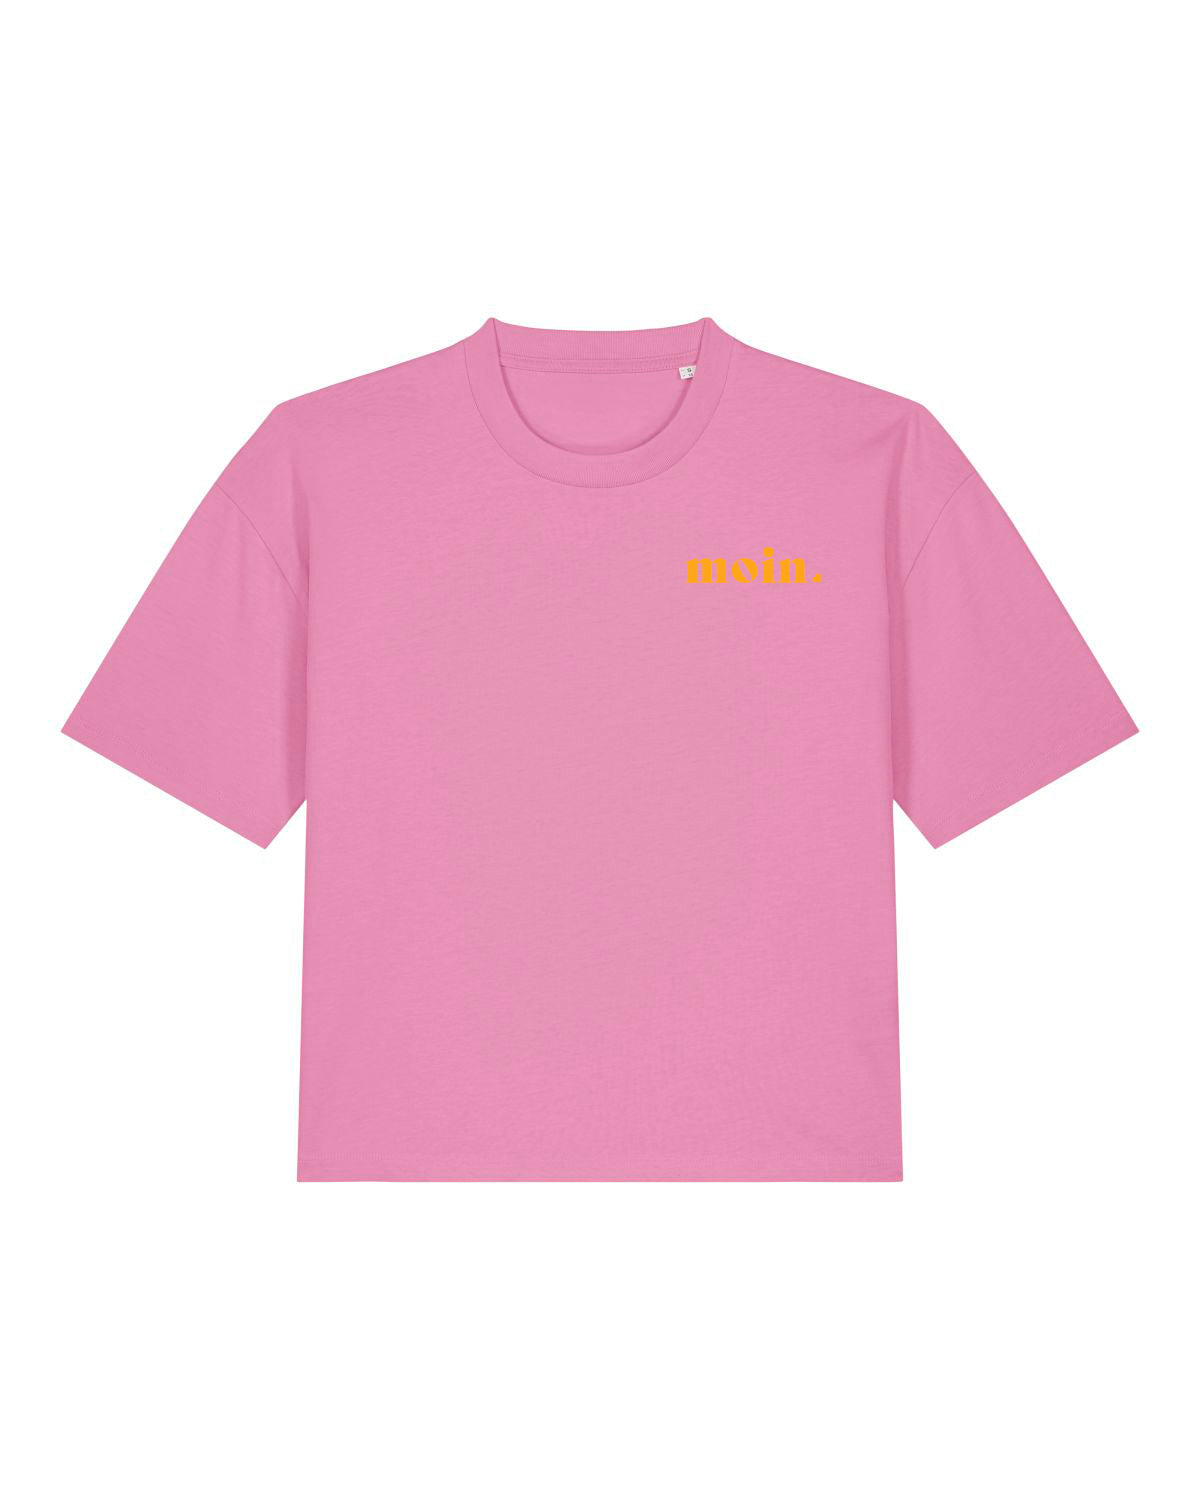 T-Shirt "Moin" Bubble Pink/Neonorange